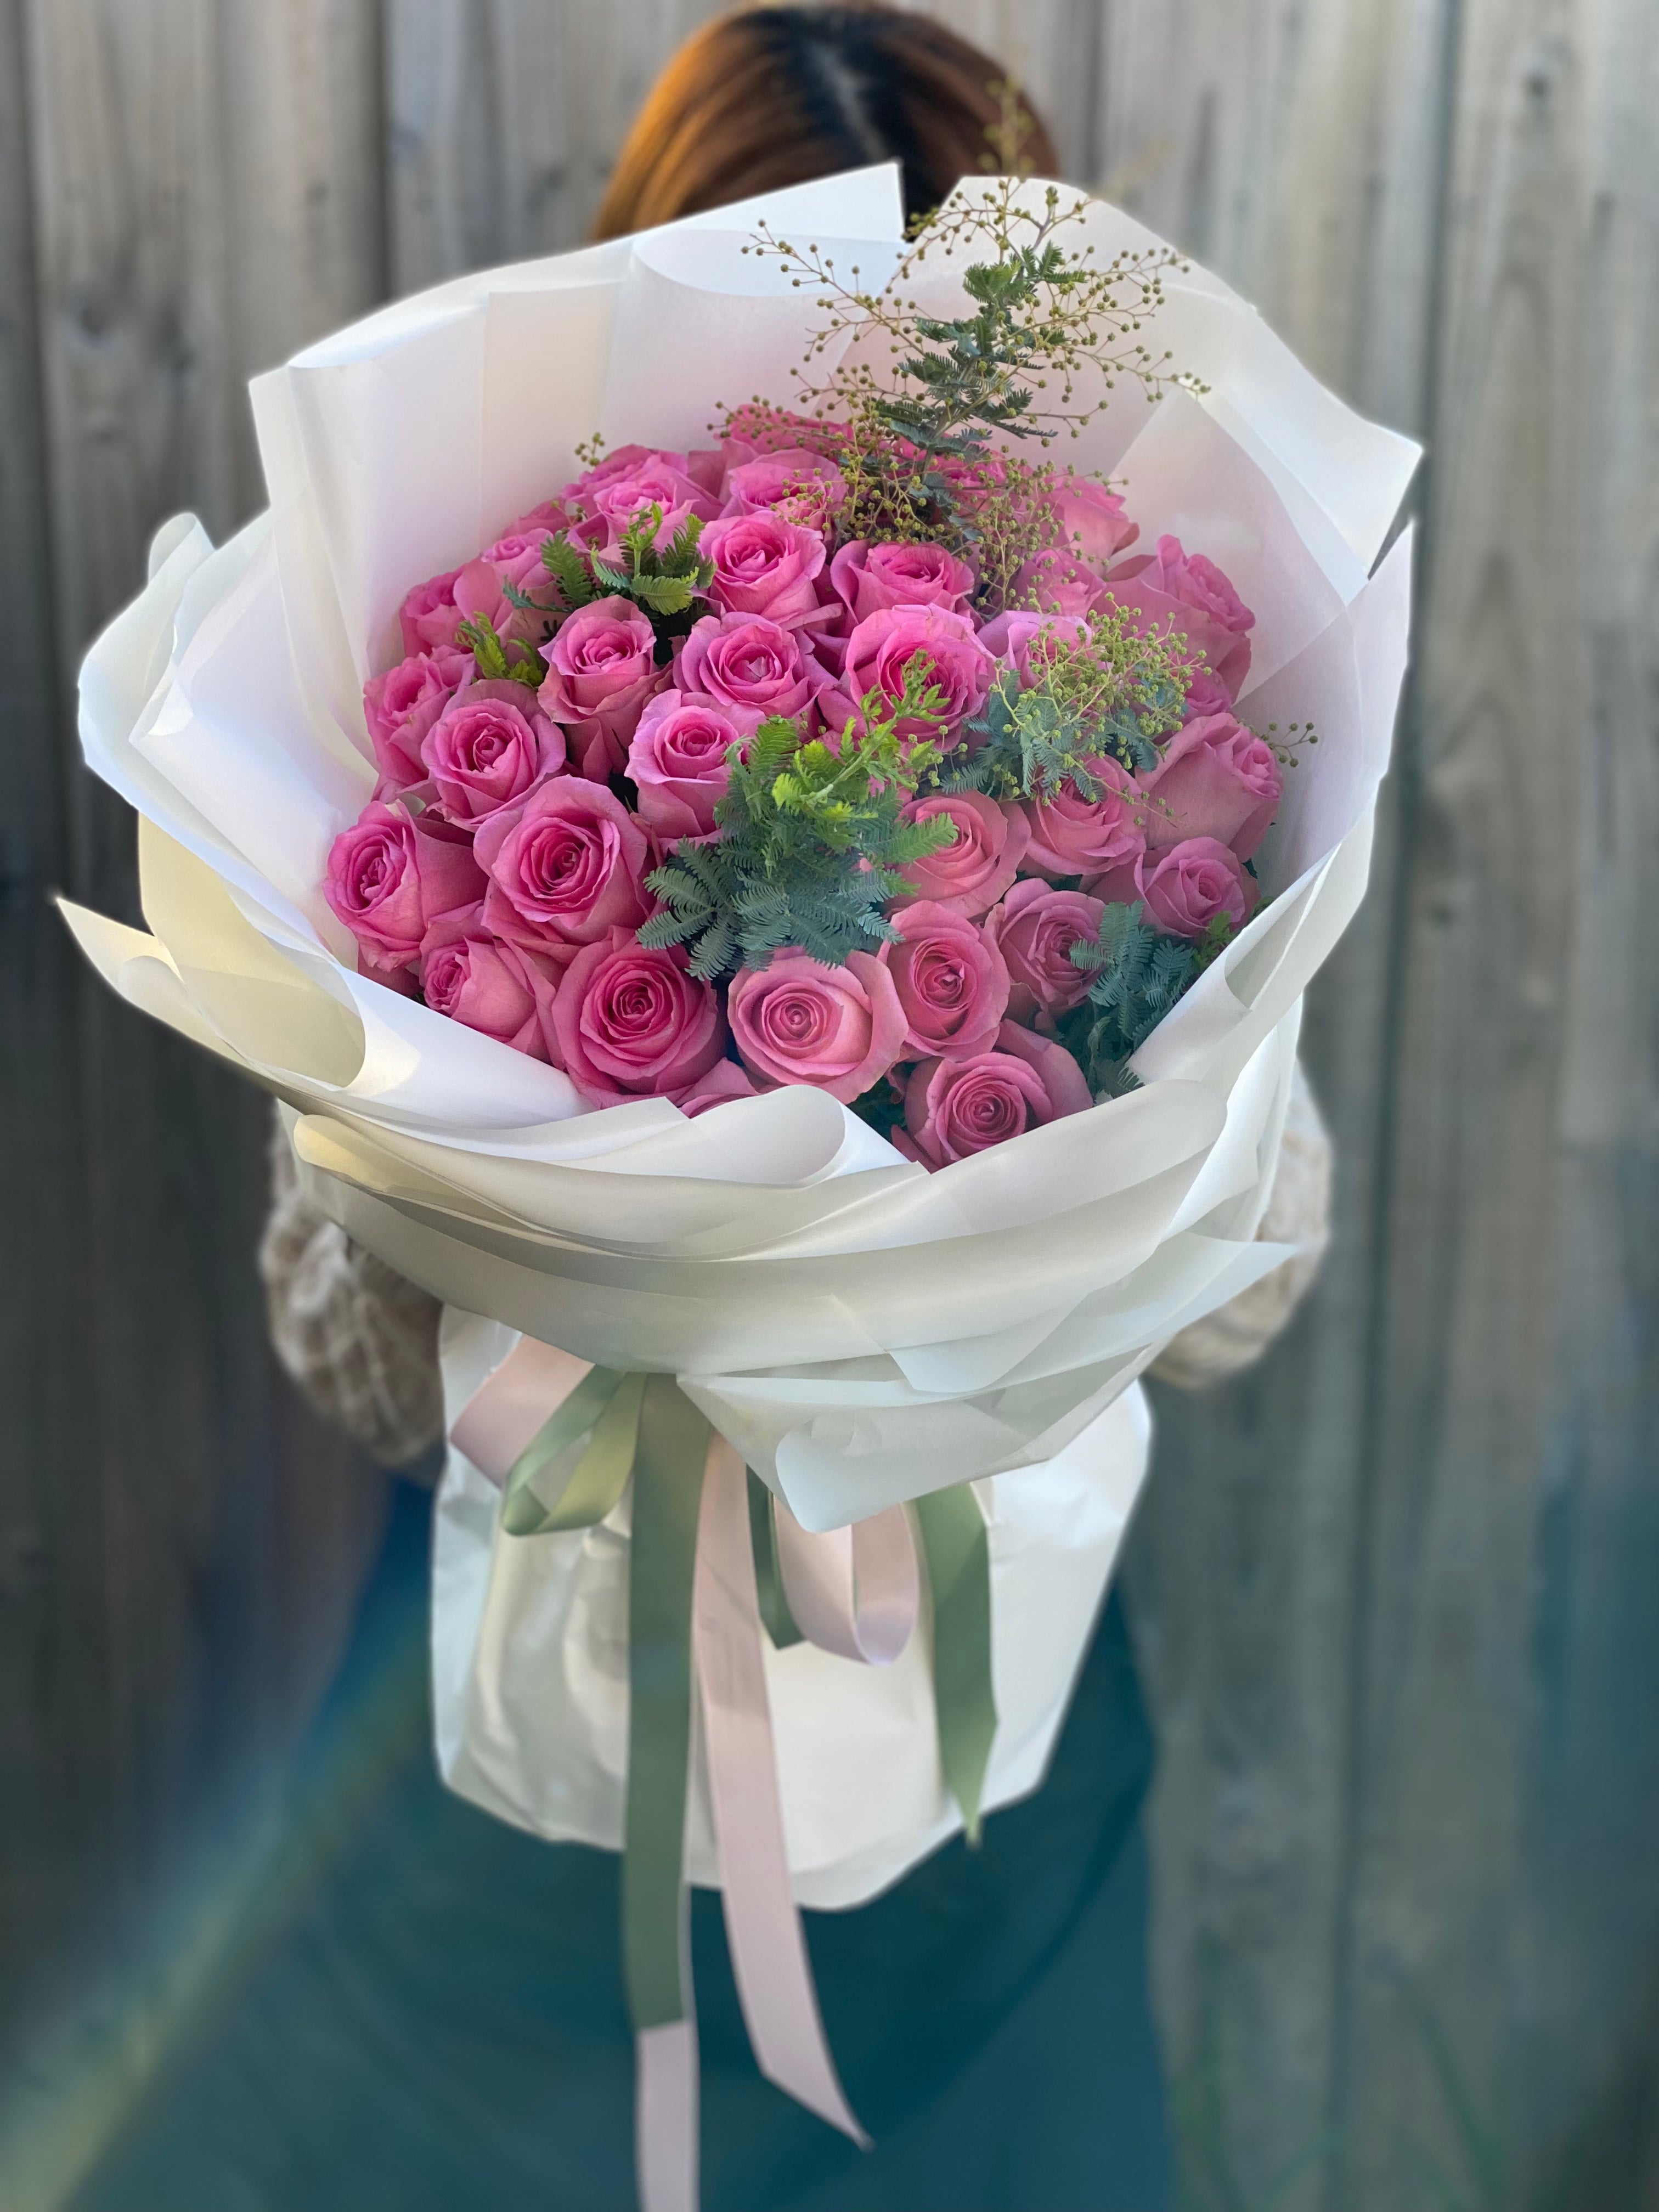 Sweet pink dream - Vermont Florist